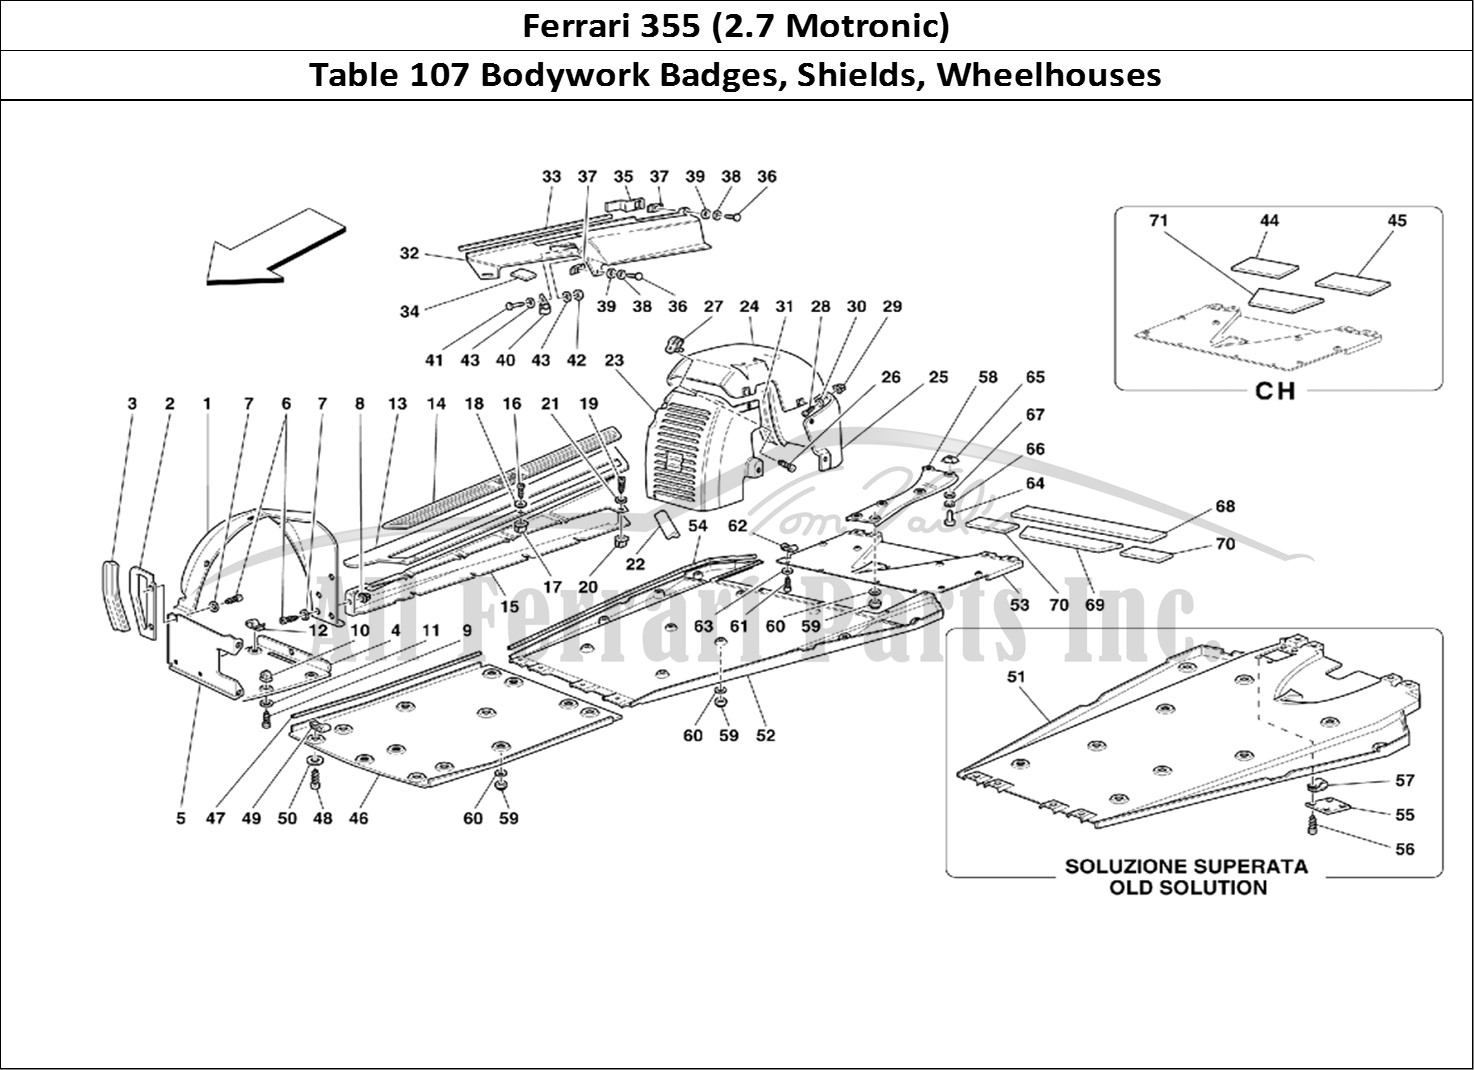 Ferrari Parts Ferrari 355 (2.7 Motronic) Page 107 Body - Shields and Wheelh